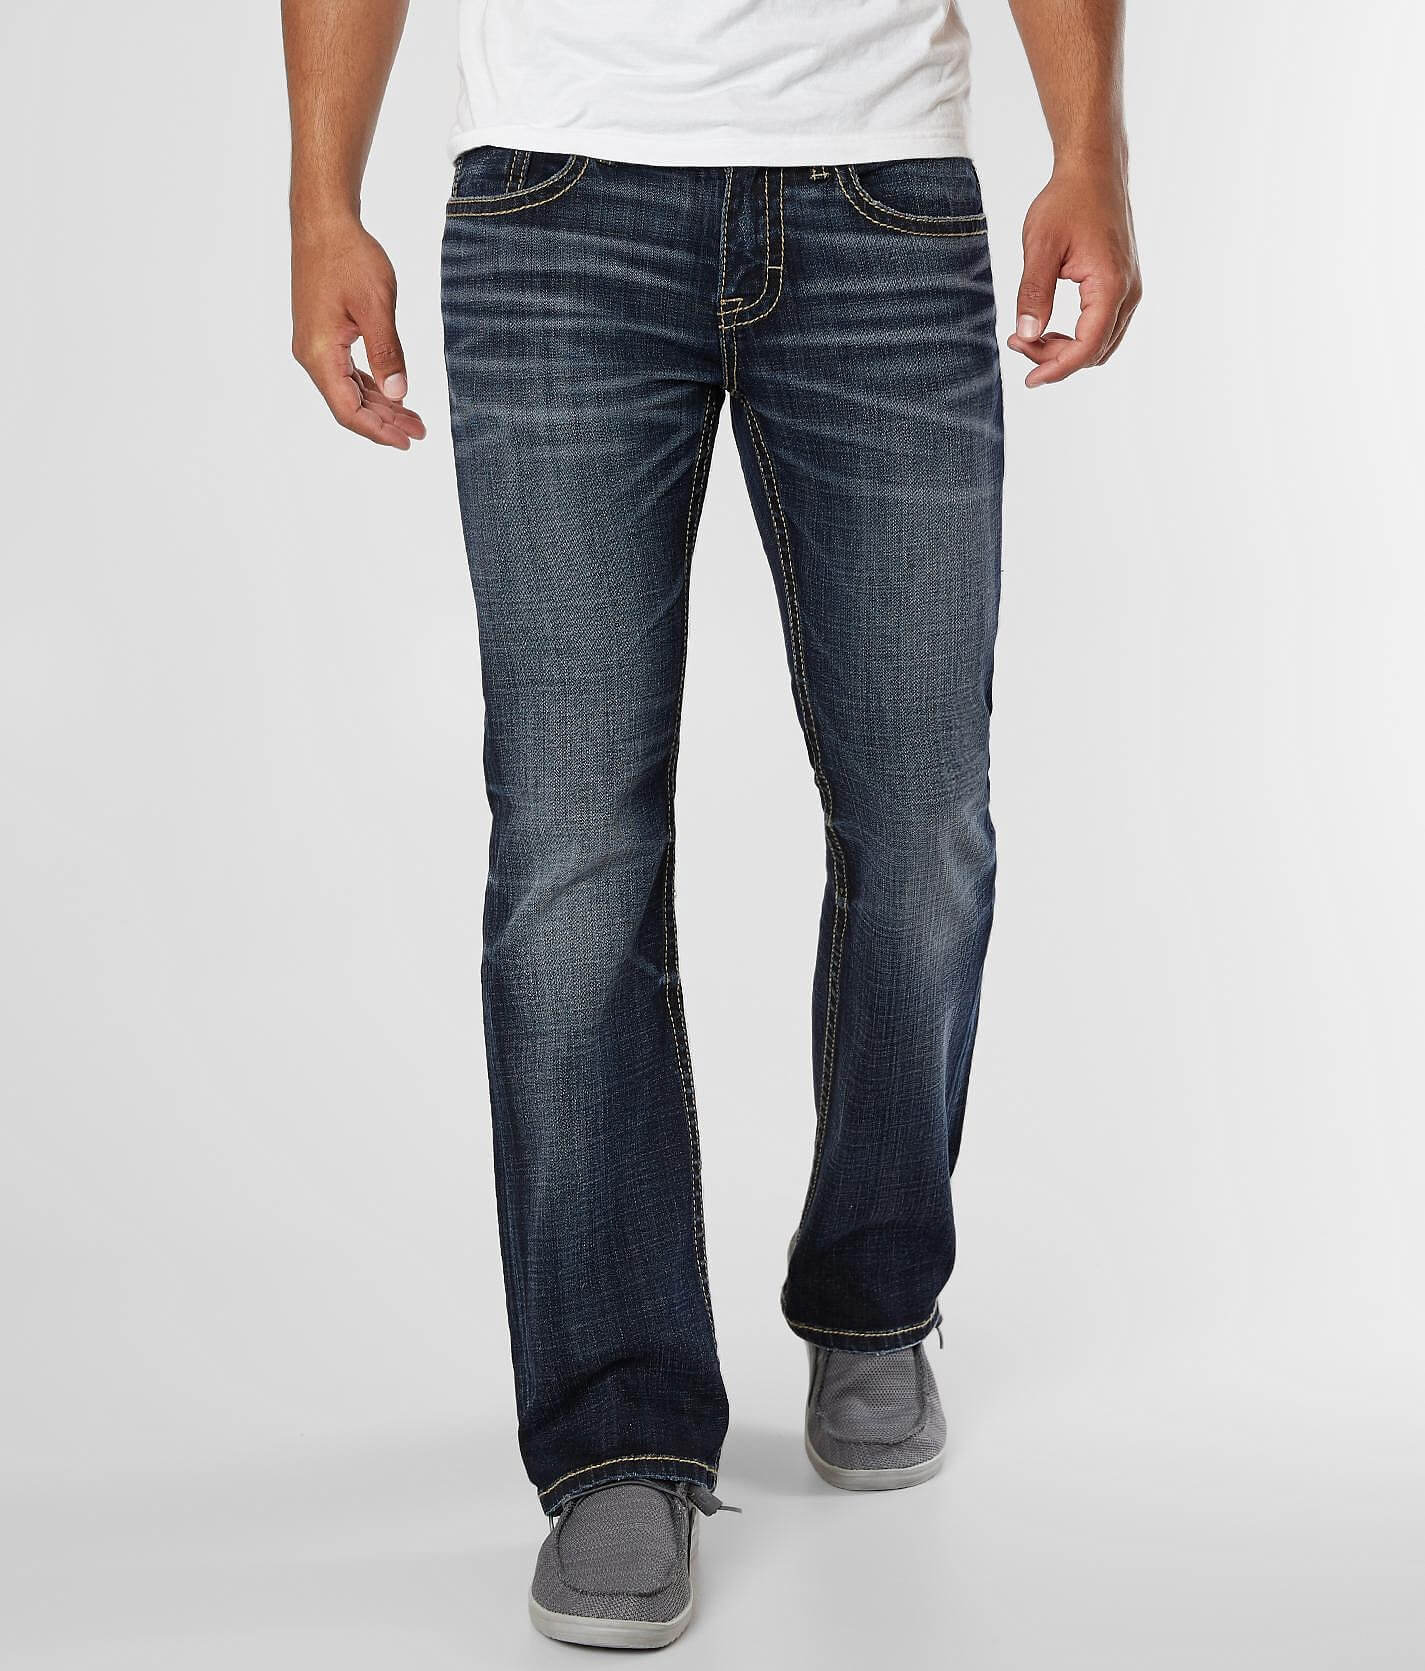 lucky brand jeans men's 363 vintage straight